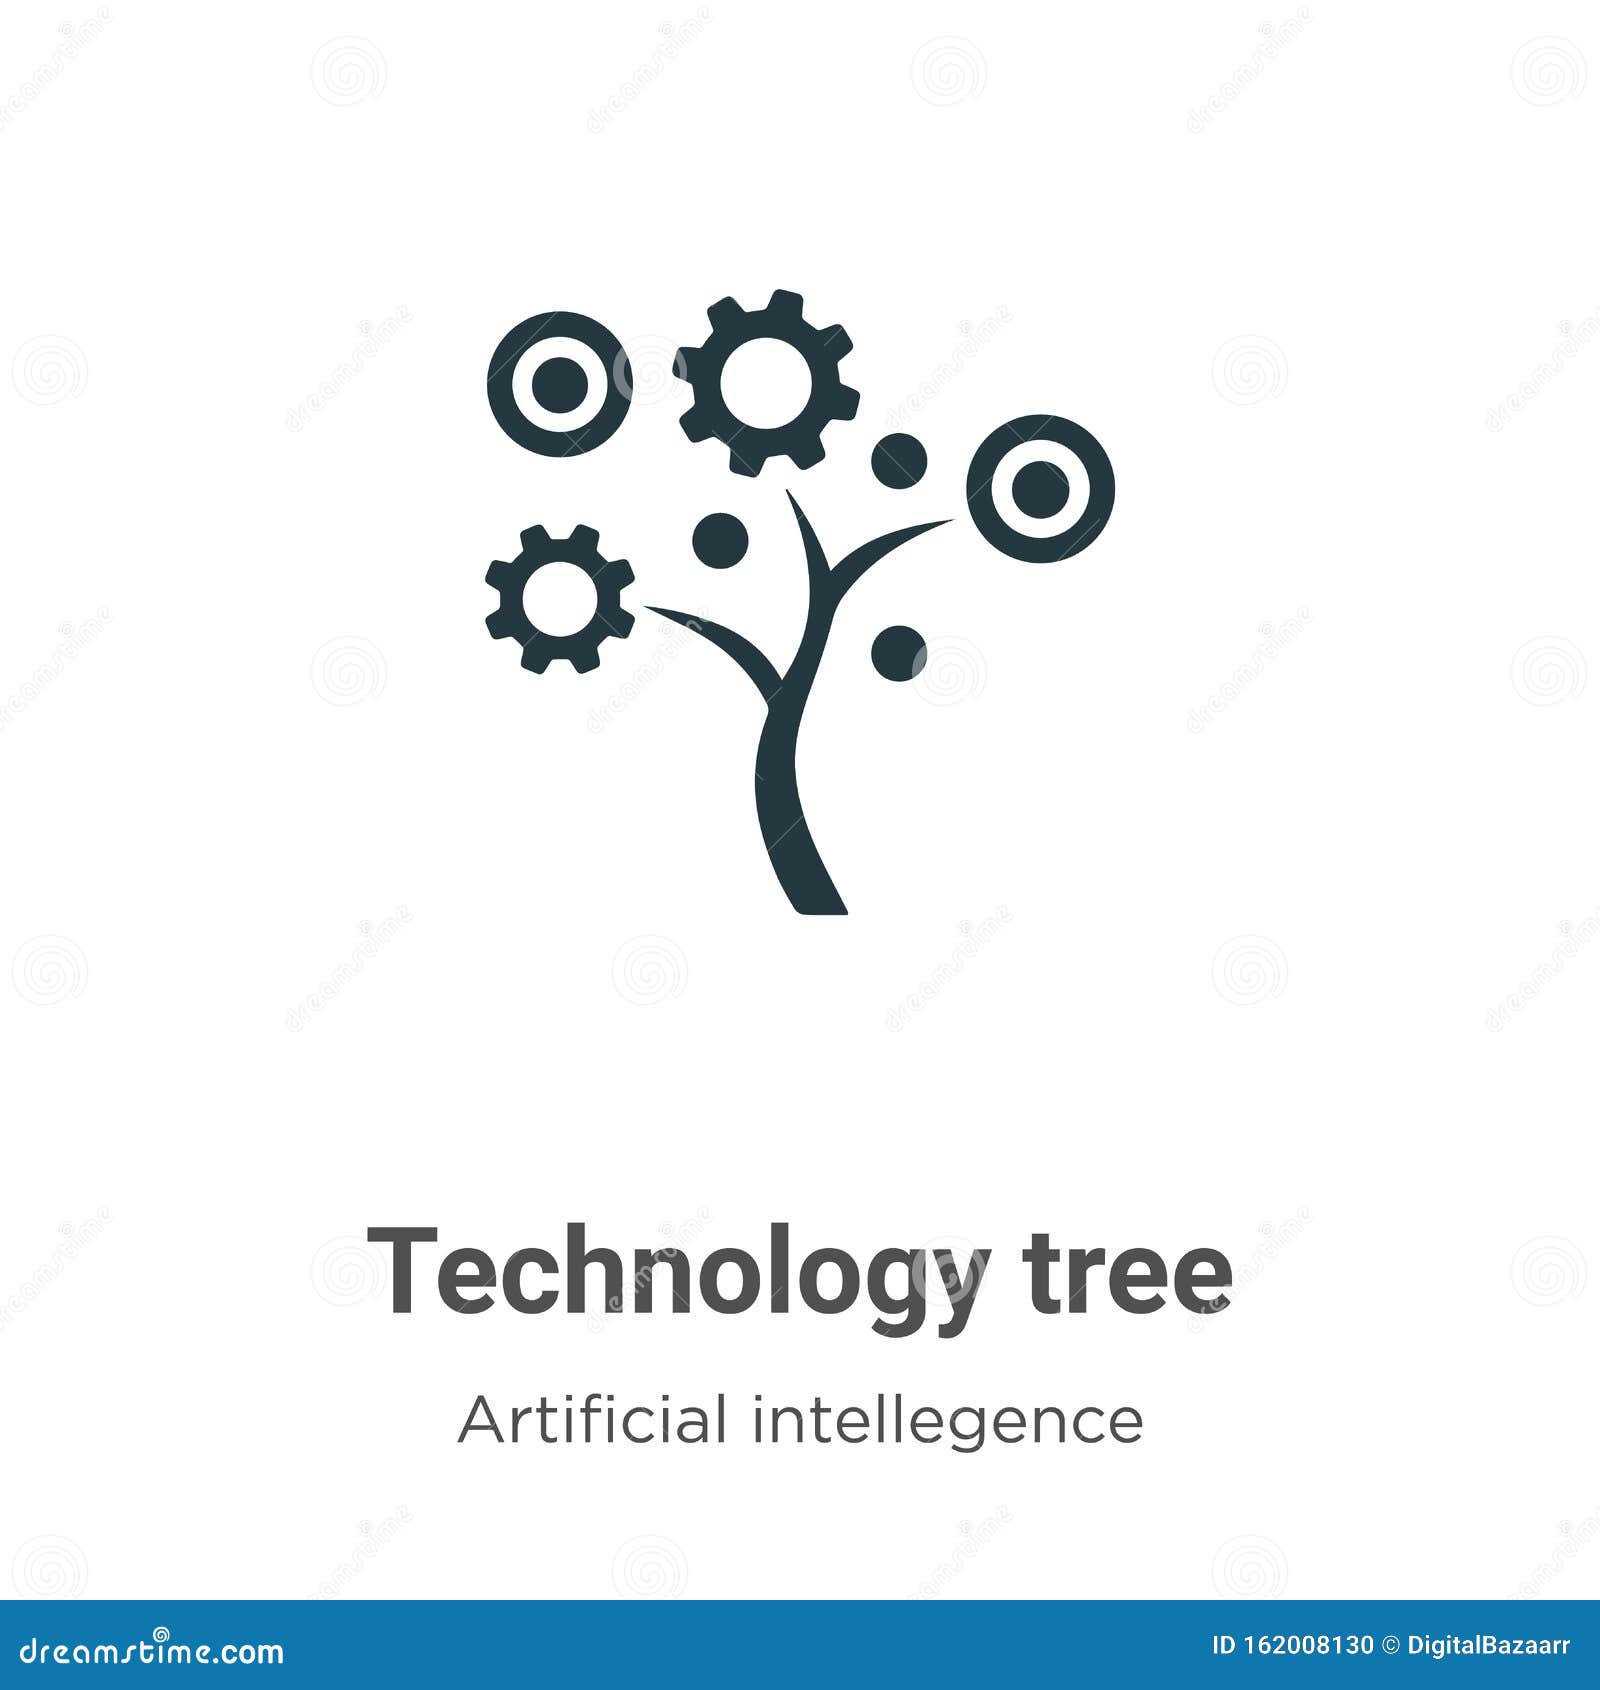 technology tree  icon on white background. flat  technology tree icon  sign from modern artificial intellegence